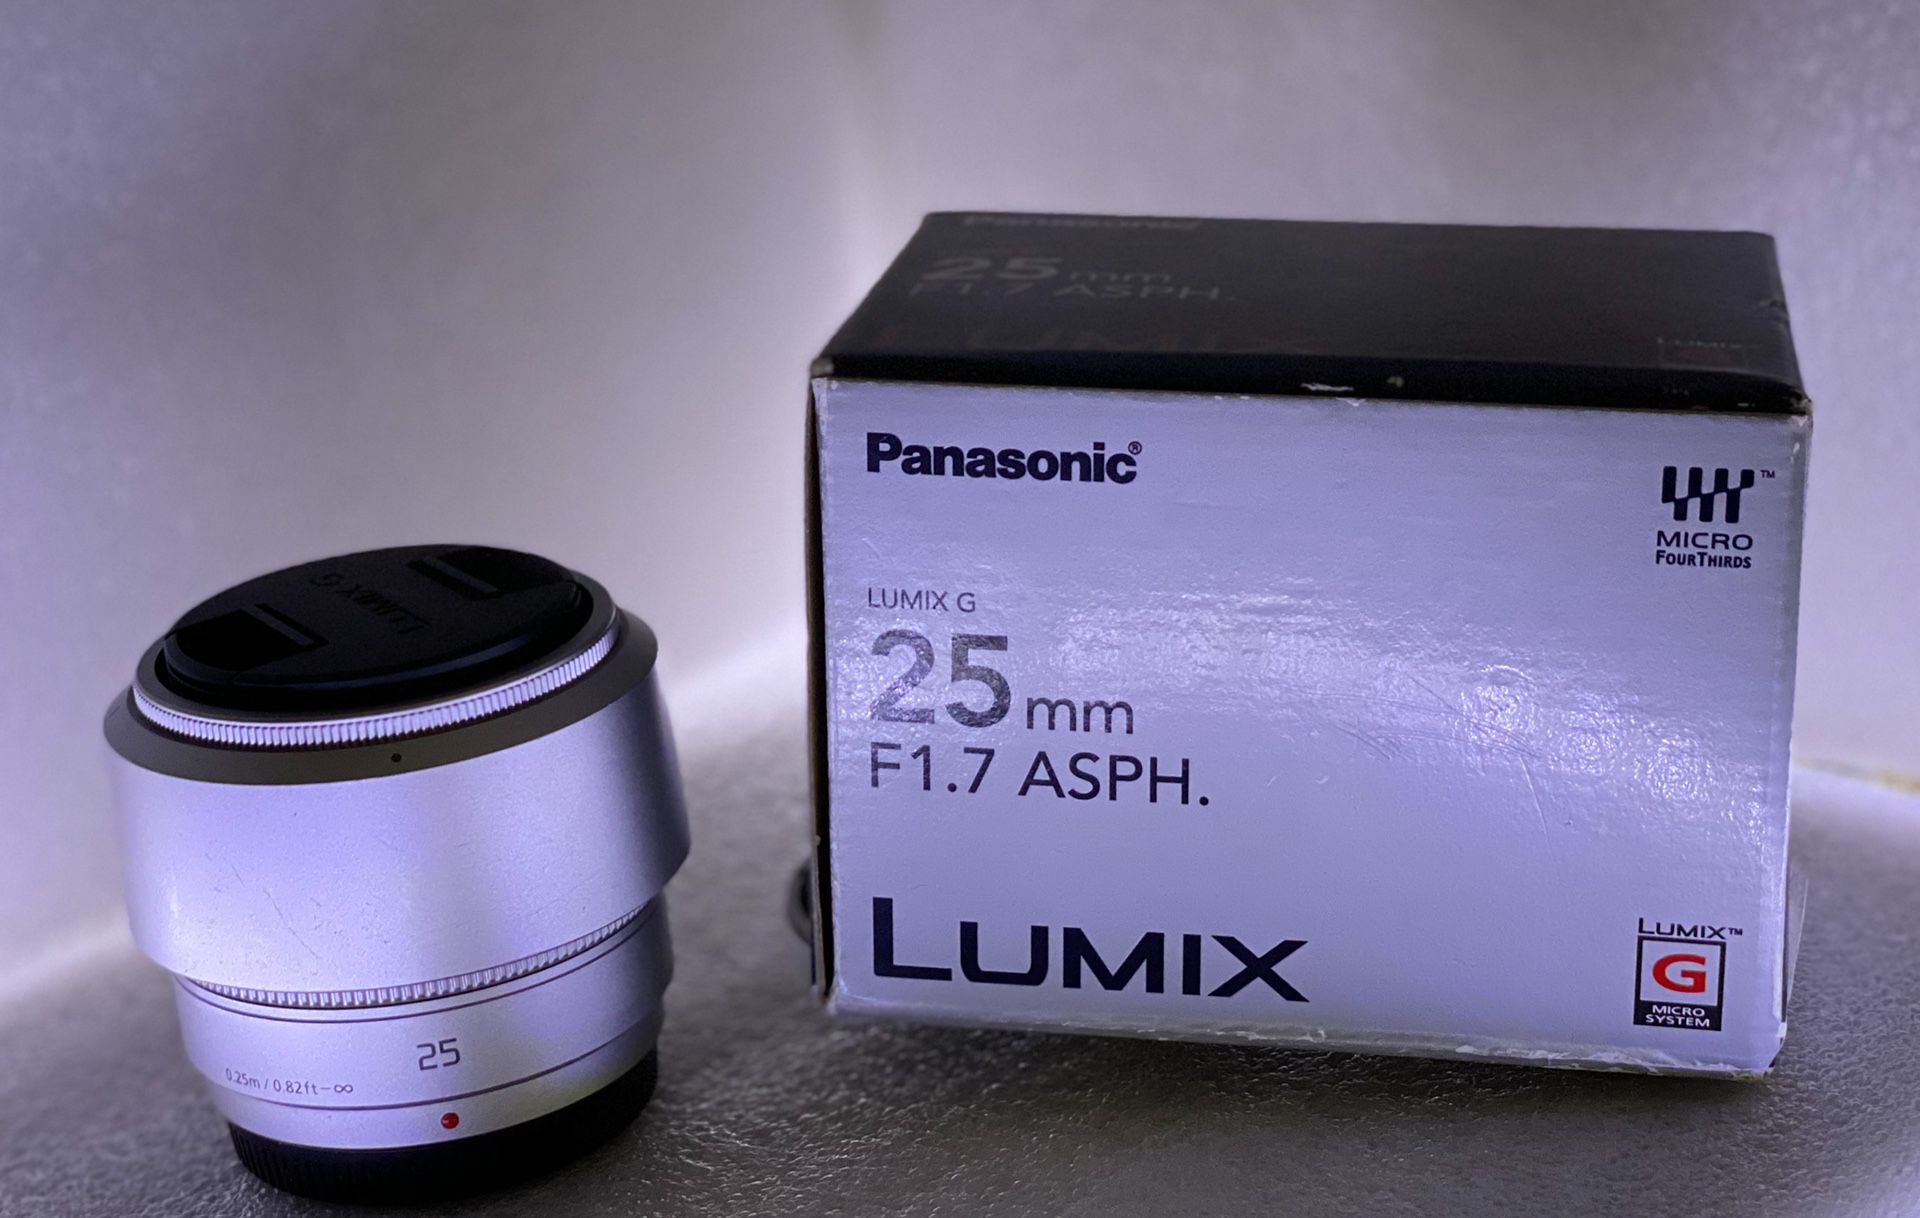 Panasonic Lumix G 25mm F1.7 ASPH lens